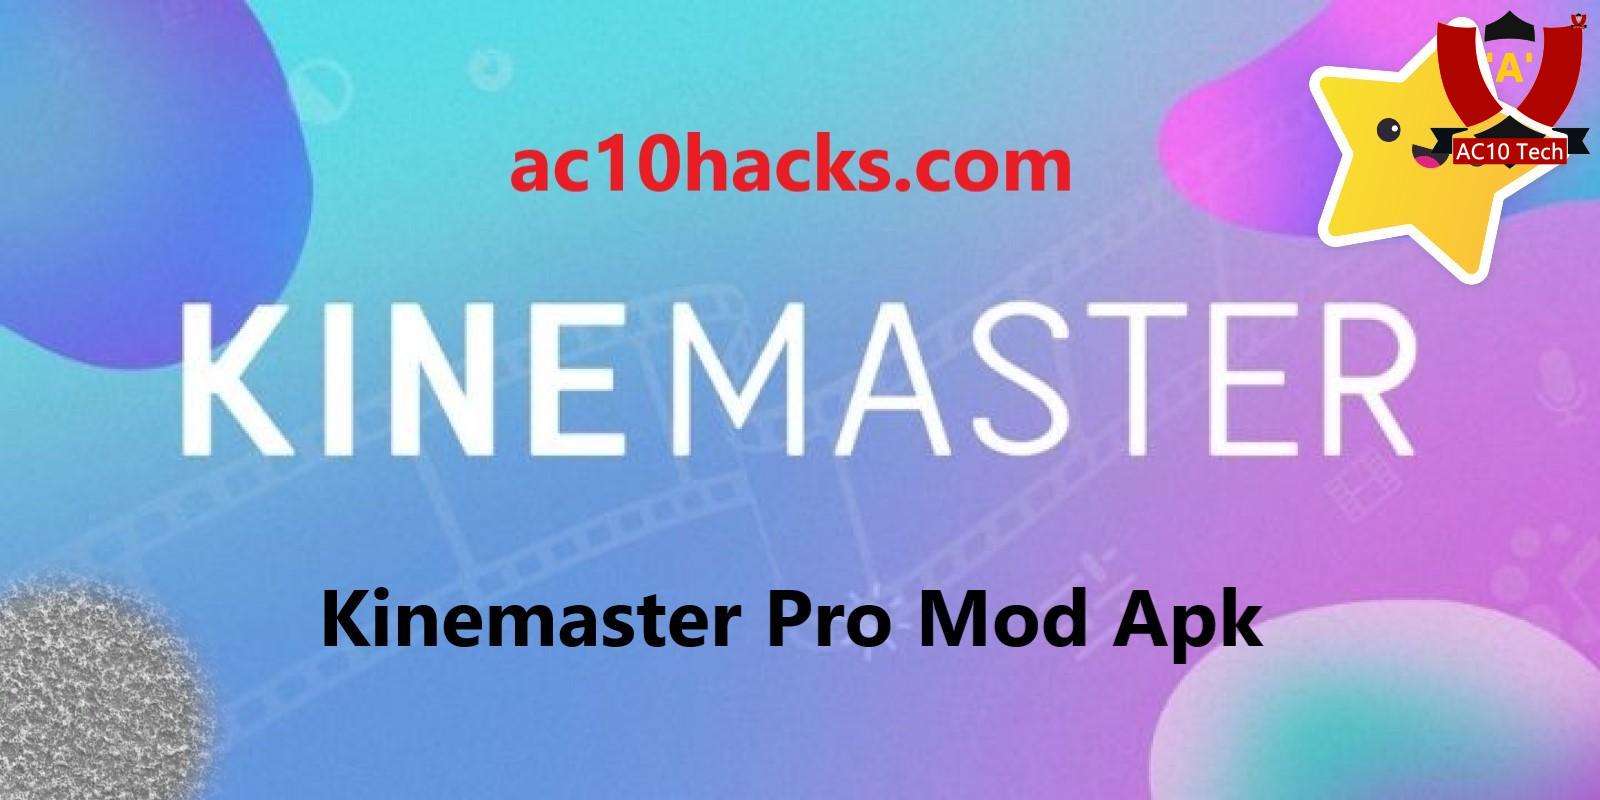 Kinemaster Pro Mod Apk full